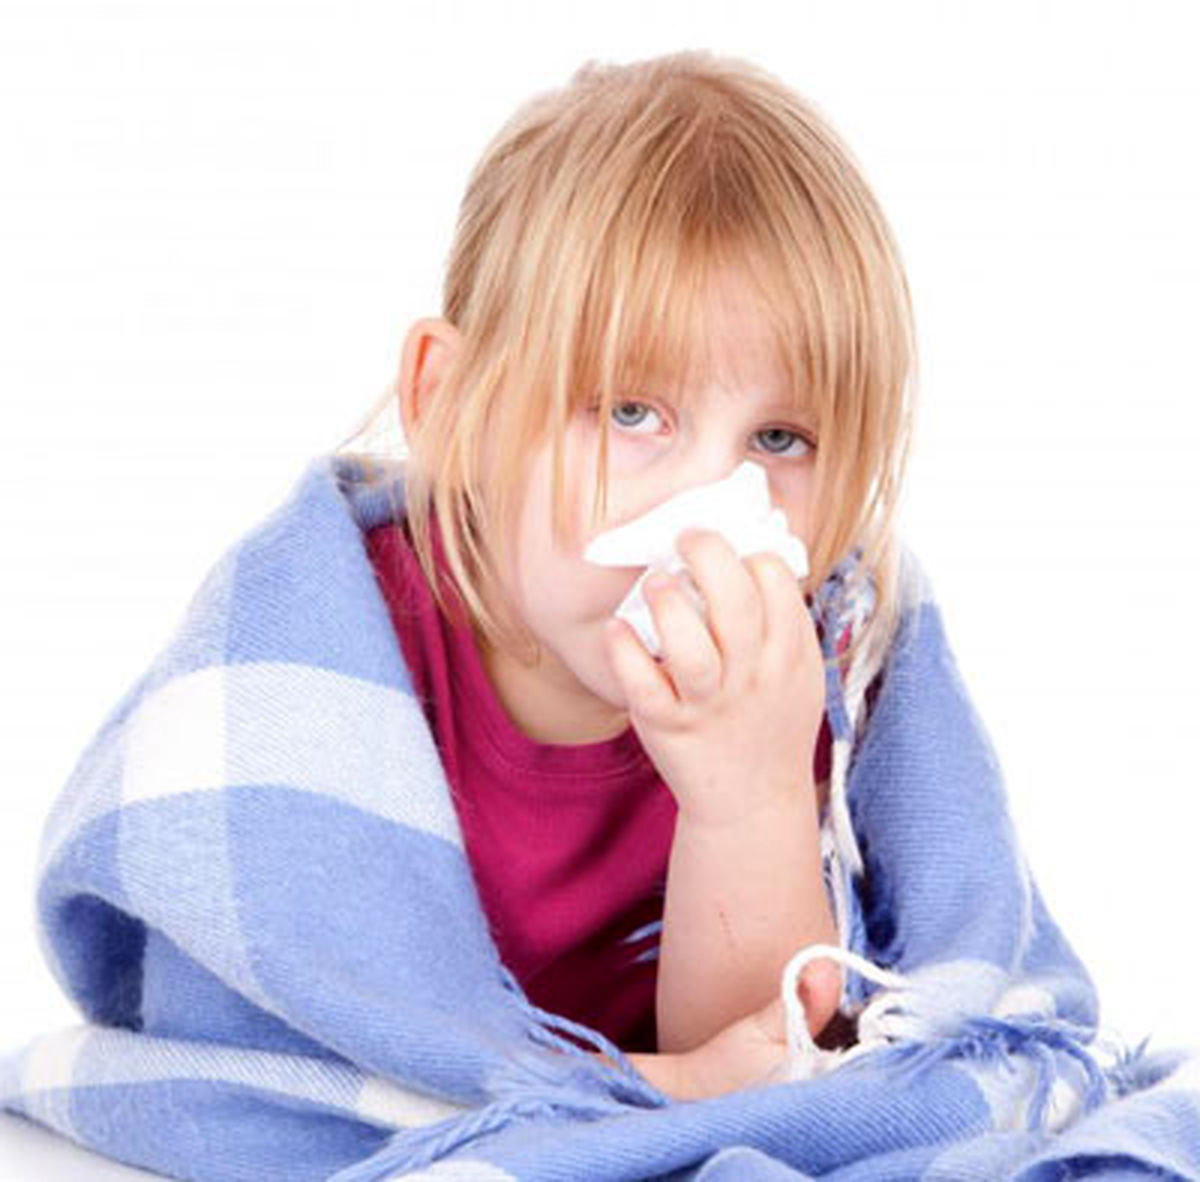 سرماخوردگی مکرر کودکان، علت